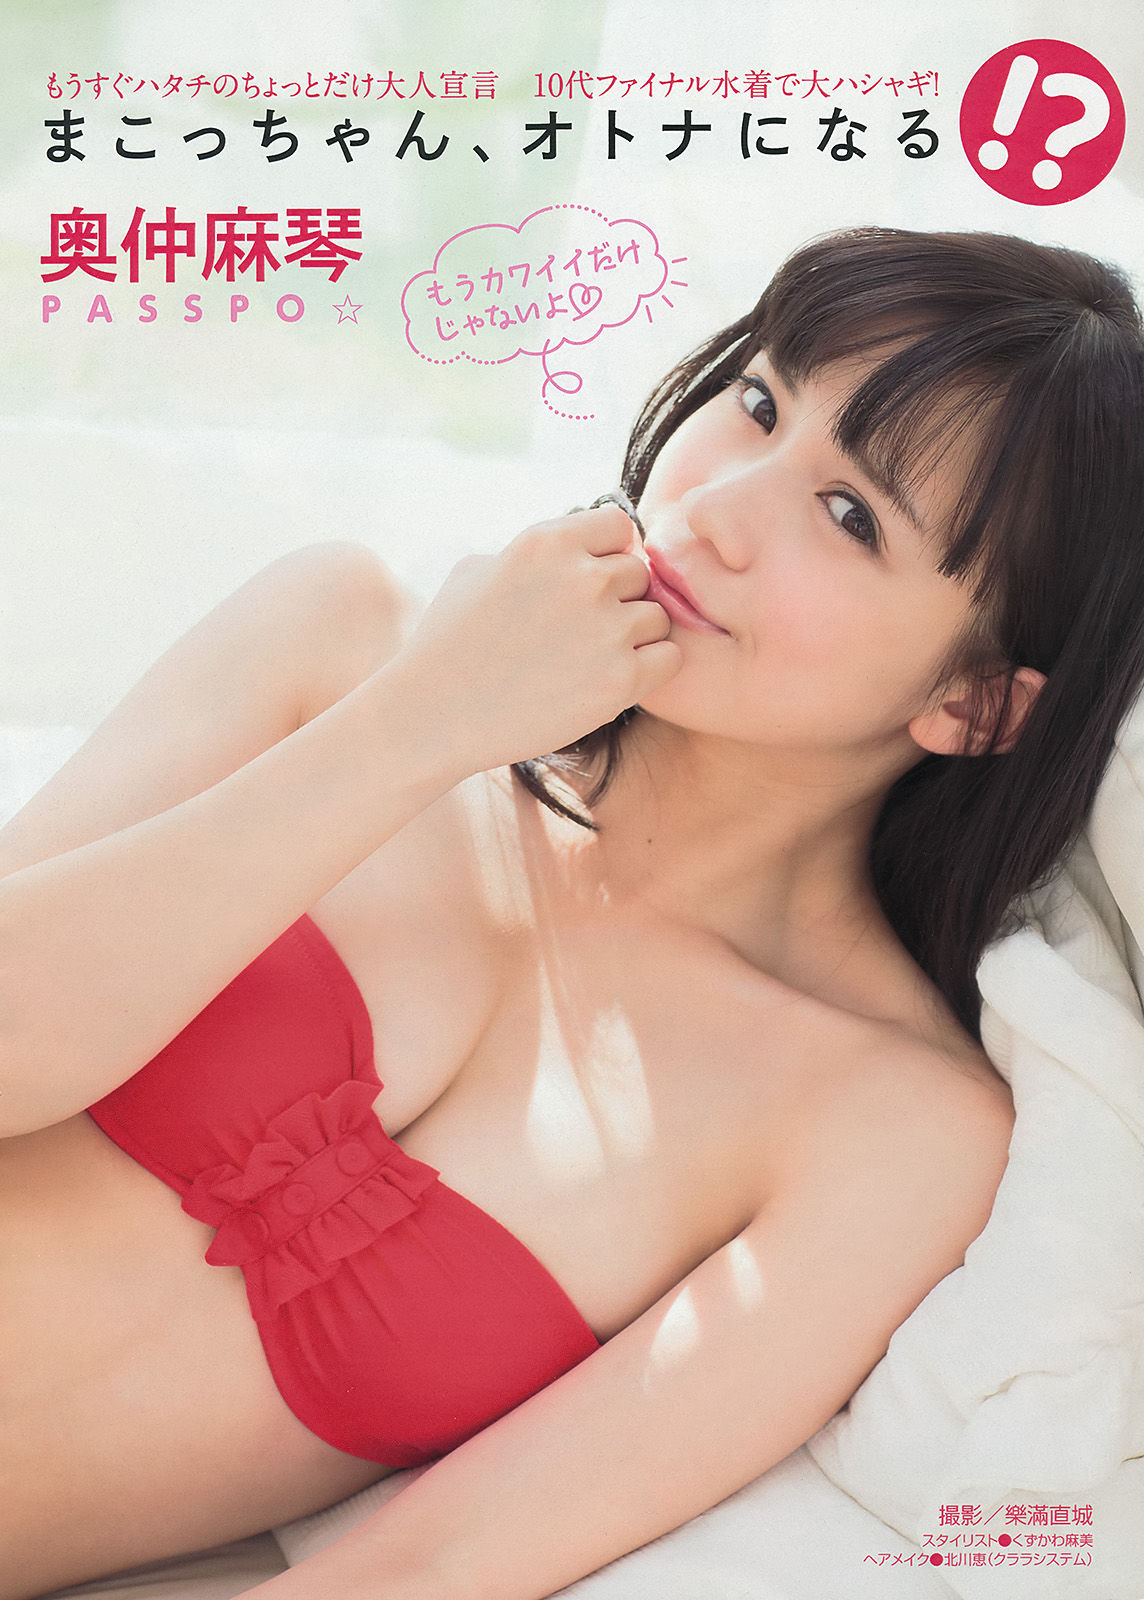 [Young Magazine] 2013年No.50 奥仲麻琴 佐野ひなこ 浜崎あゆみ